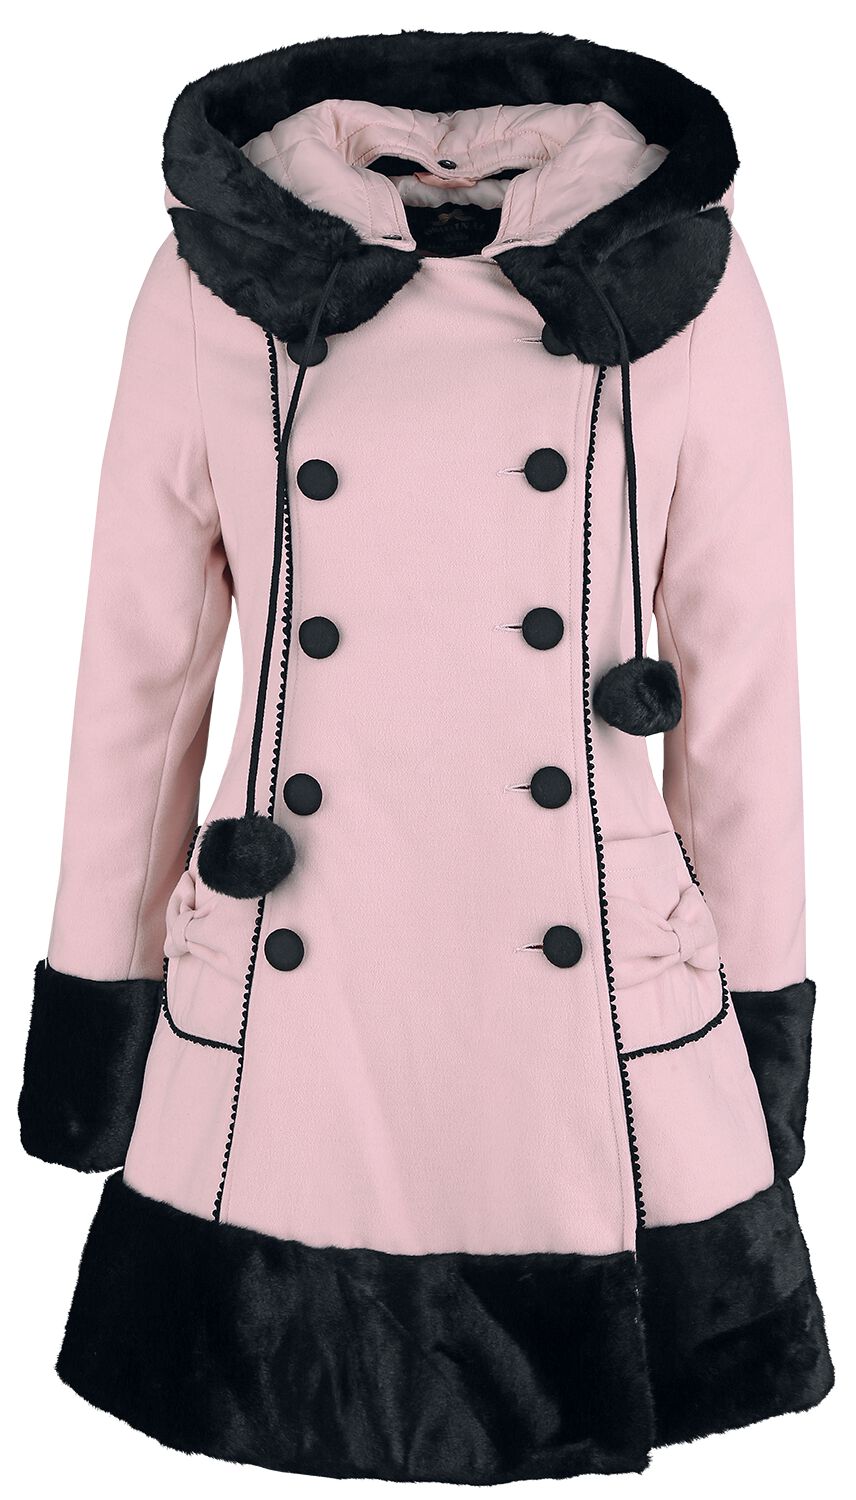 Hell Bunny Sarah Jane Coat Wintermantel rosa in XL